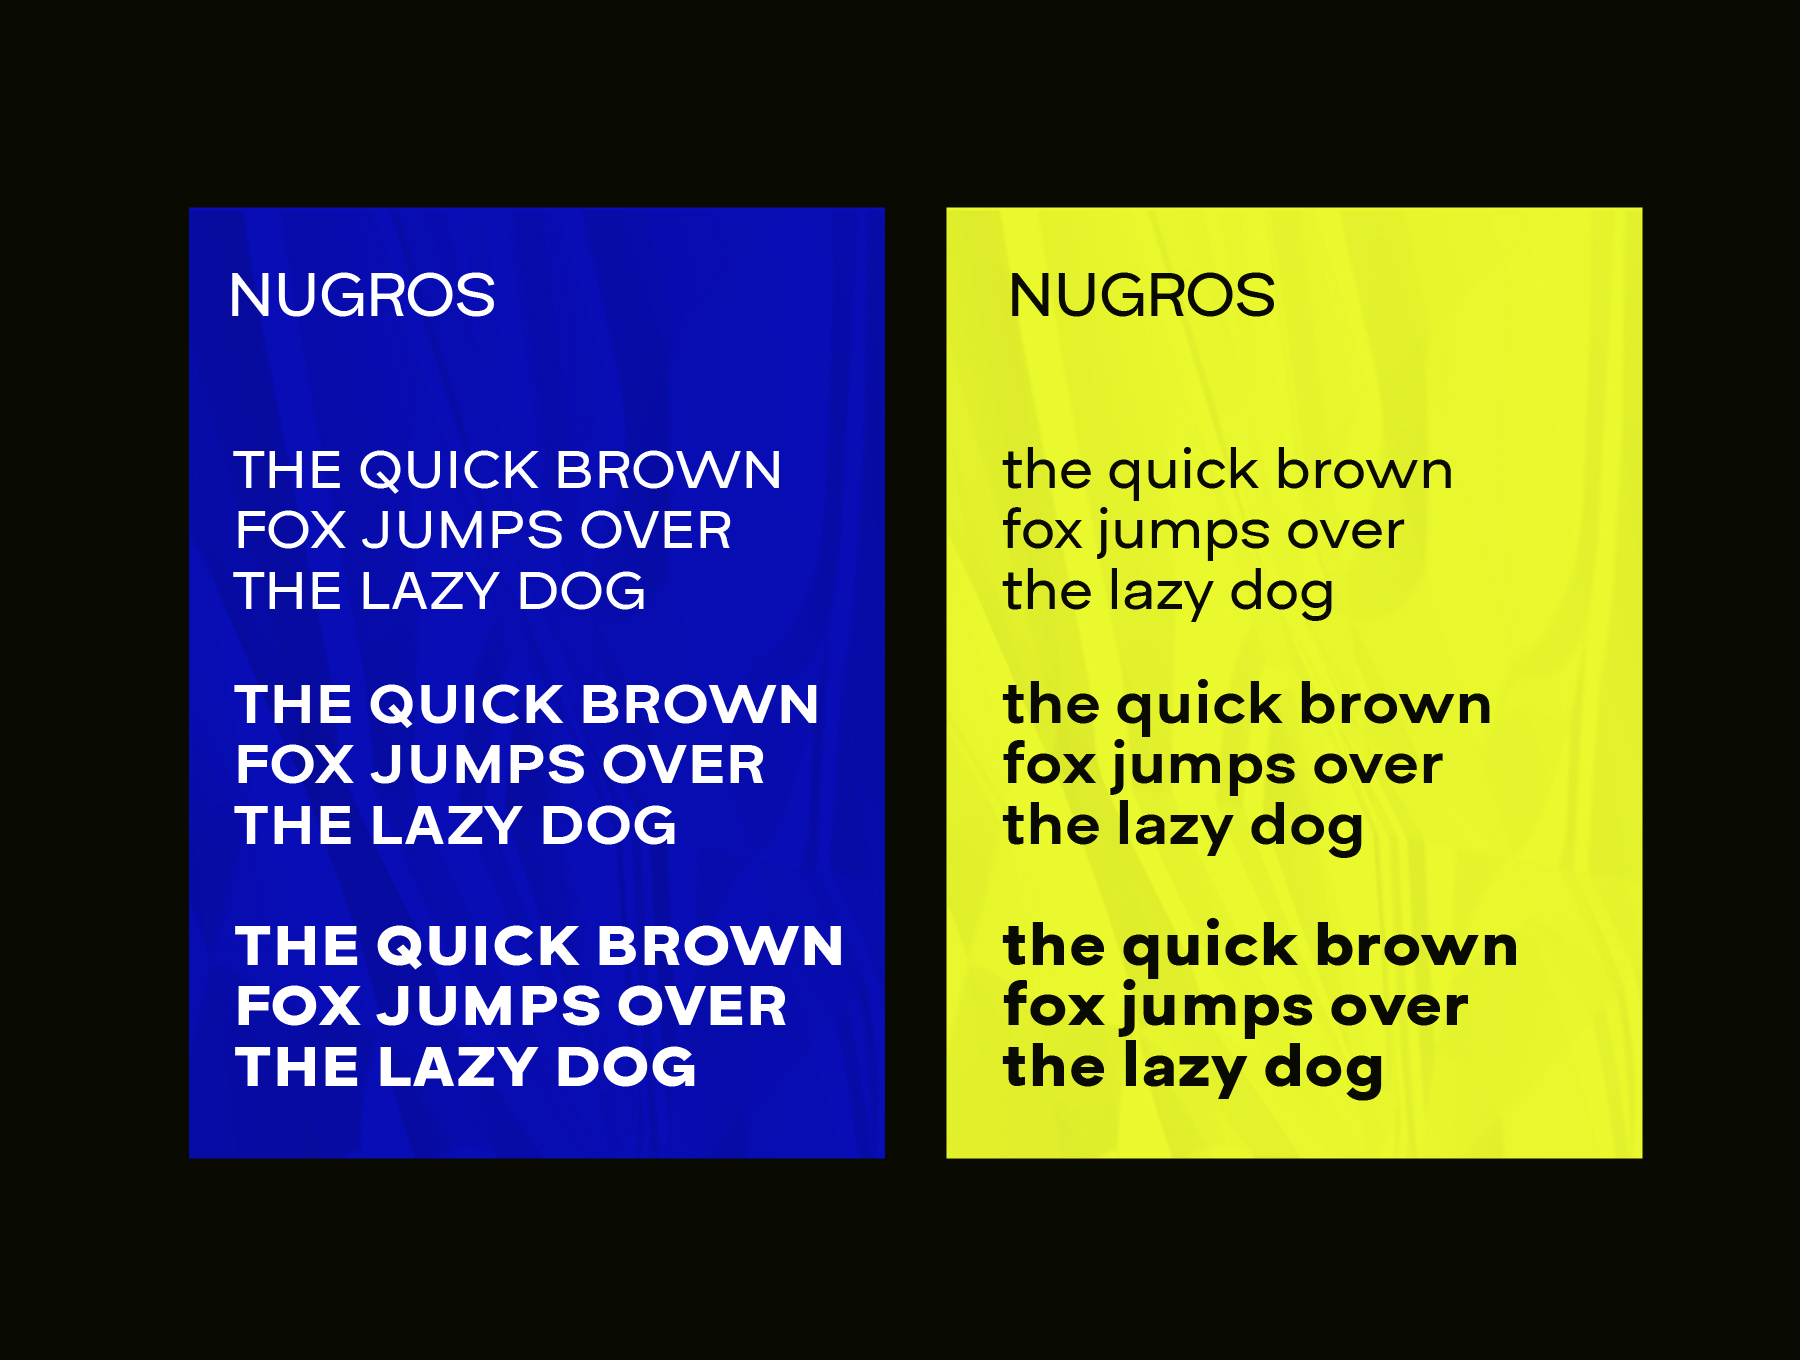 Nugros Semi Bold Font preview